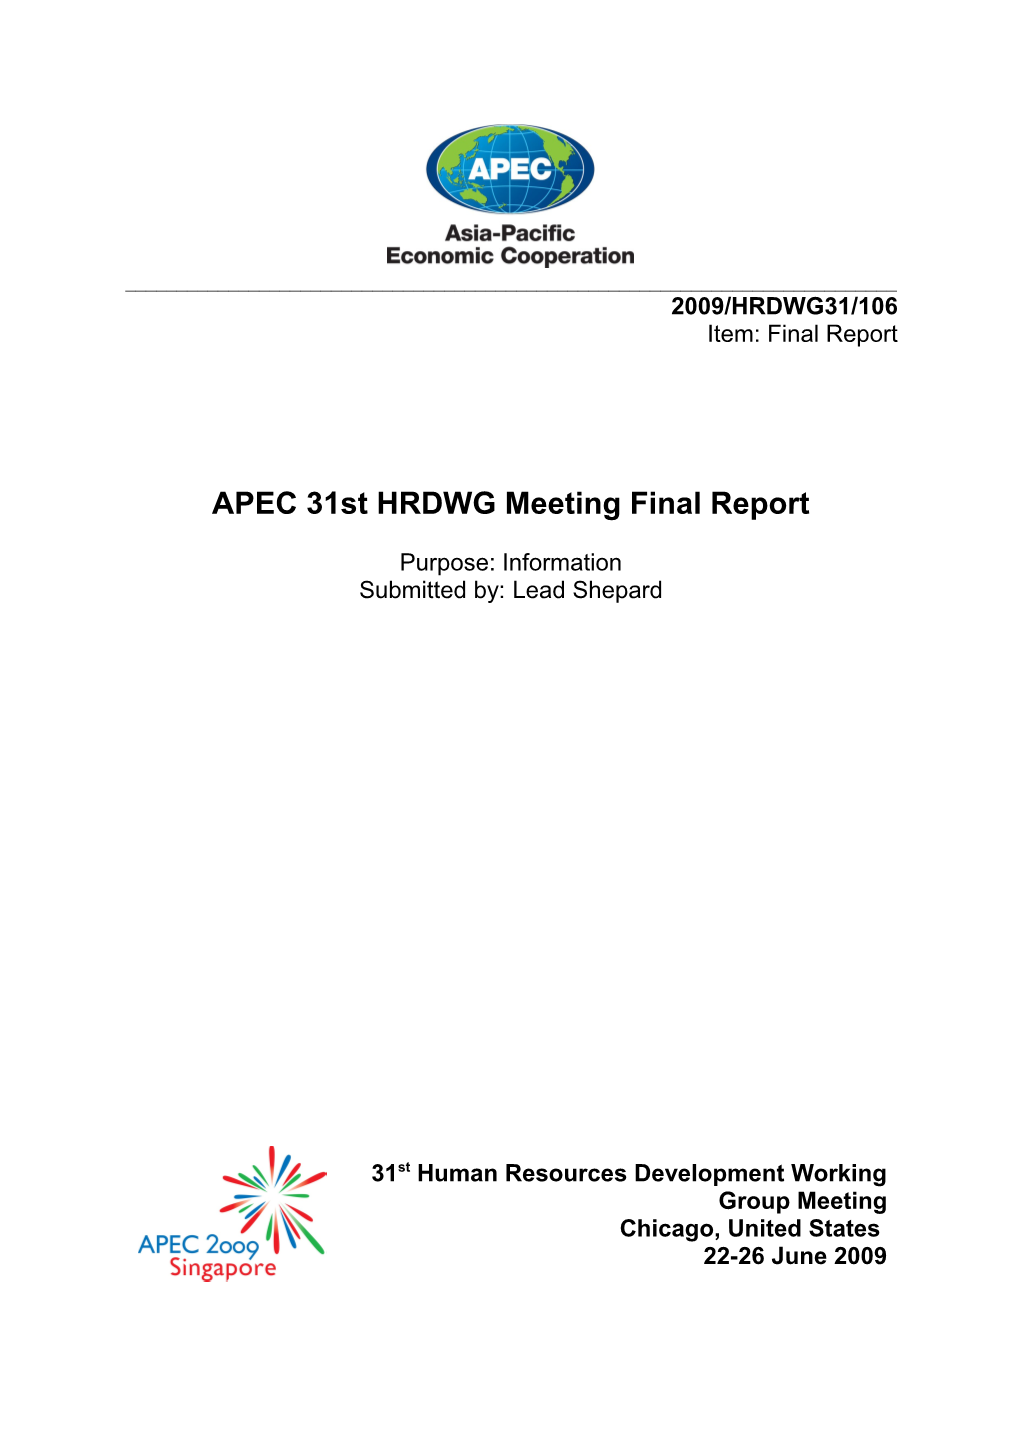 APEC Human Relations Development Working Group